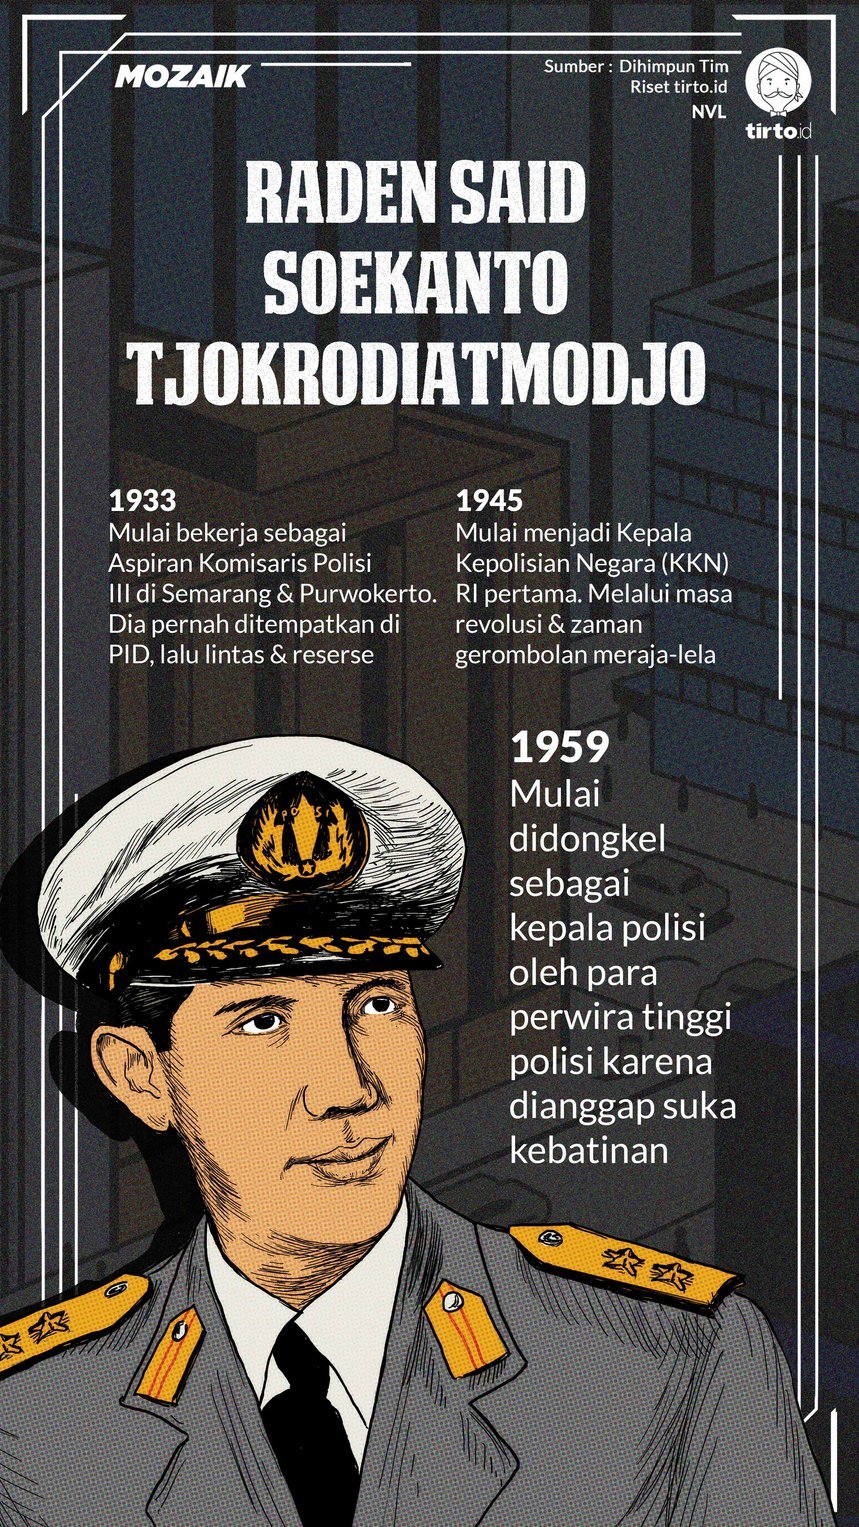 Infografik Mozaik Soekanto Tjokrodiatmodjo